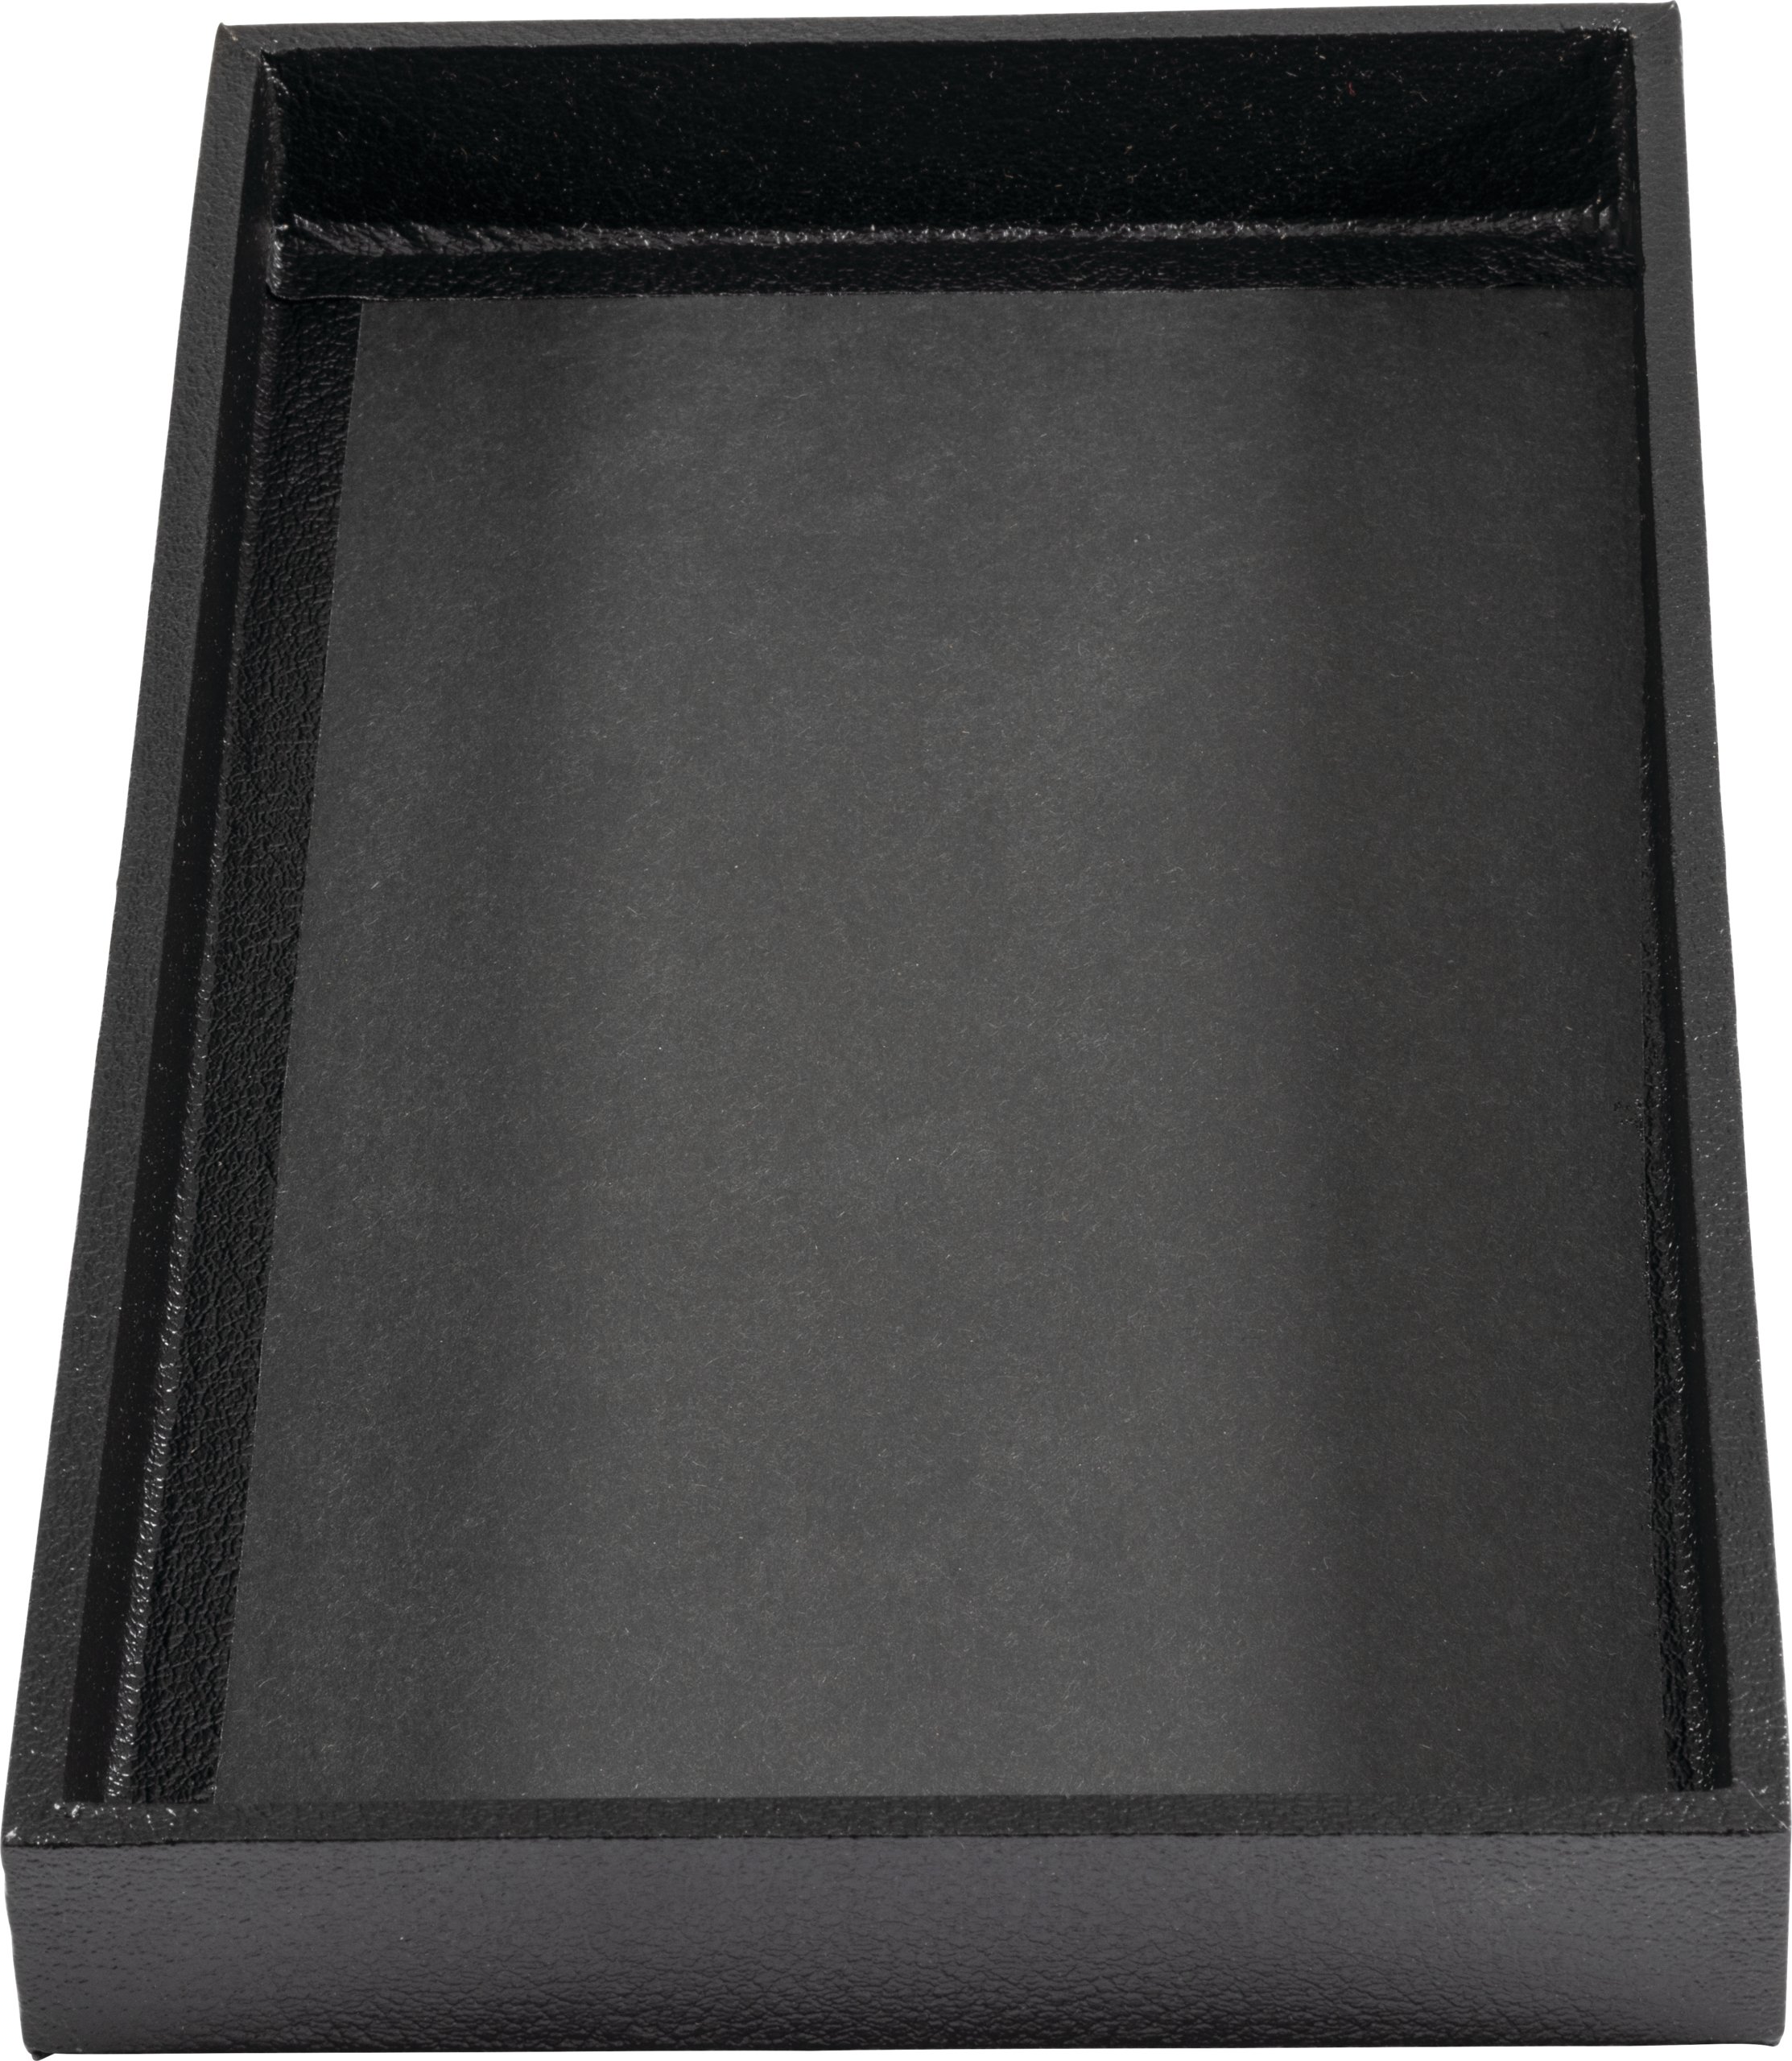 Jewelry Tray with Black Pad Full Size-14-3/4 x 8-1/4 x 1 Tall